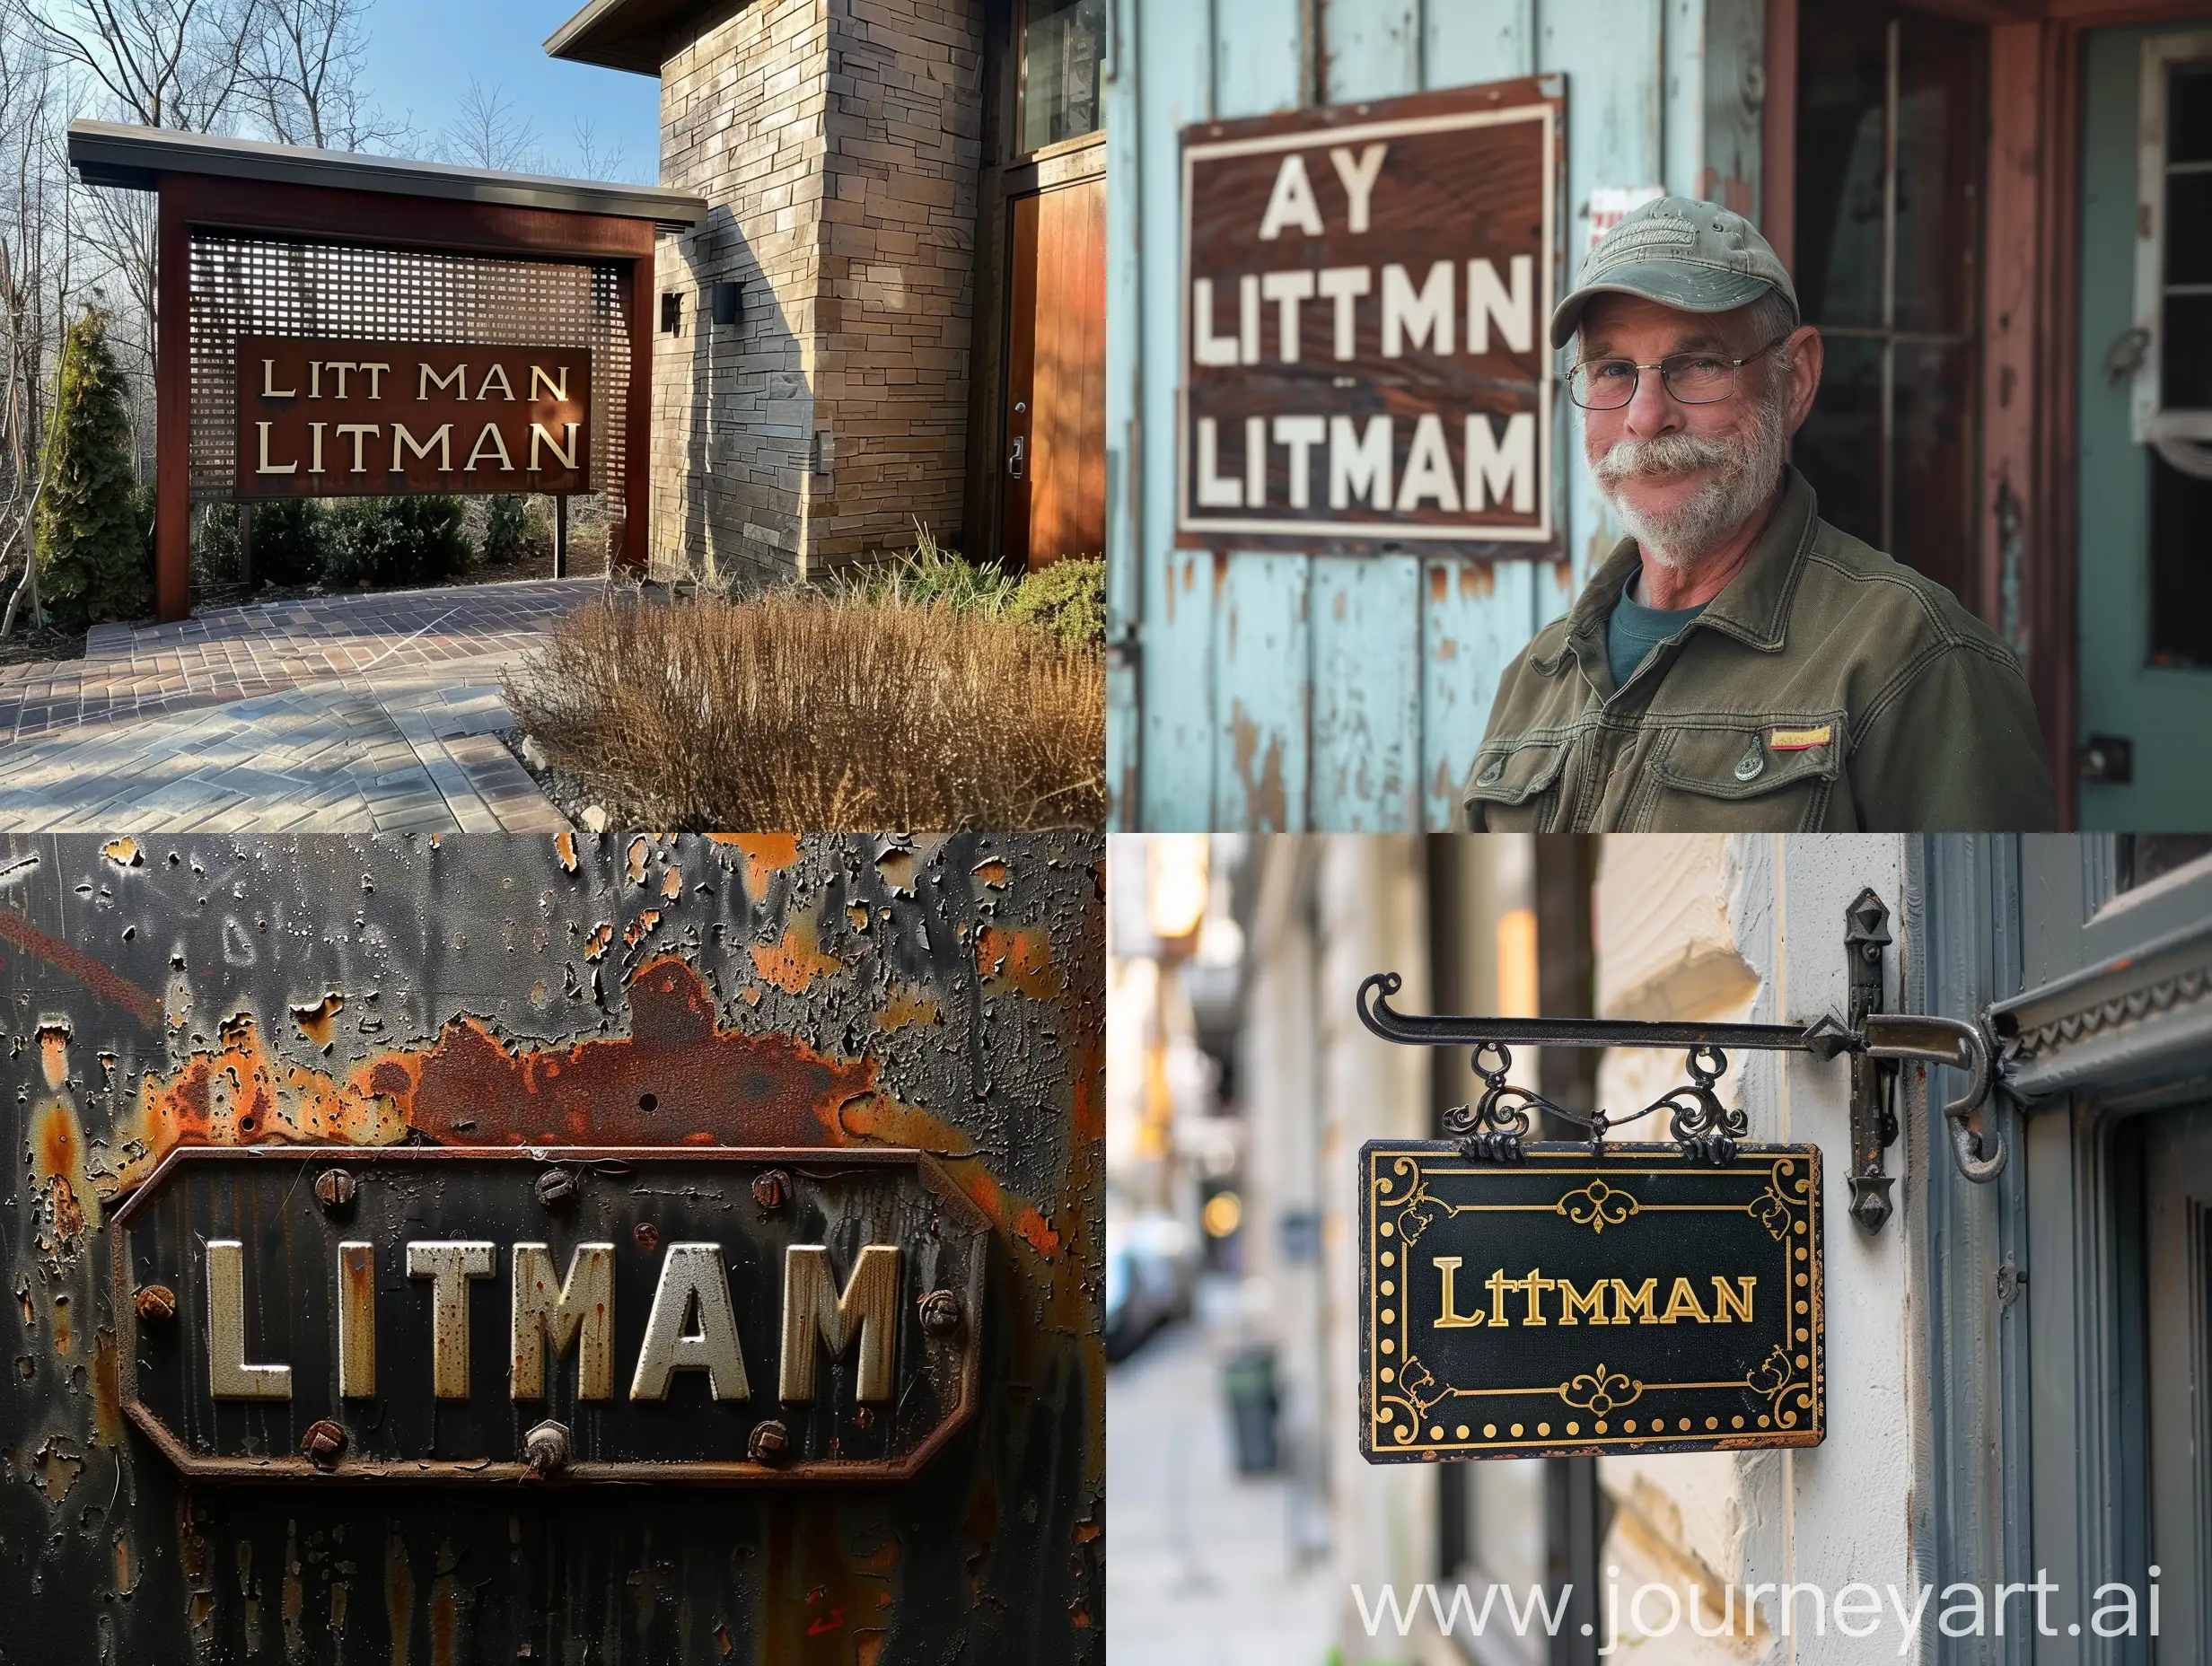 Vibrant-Littman-Sign-in-Urban-Setting